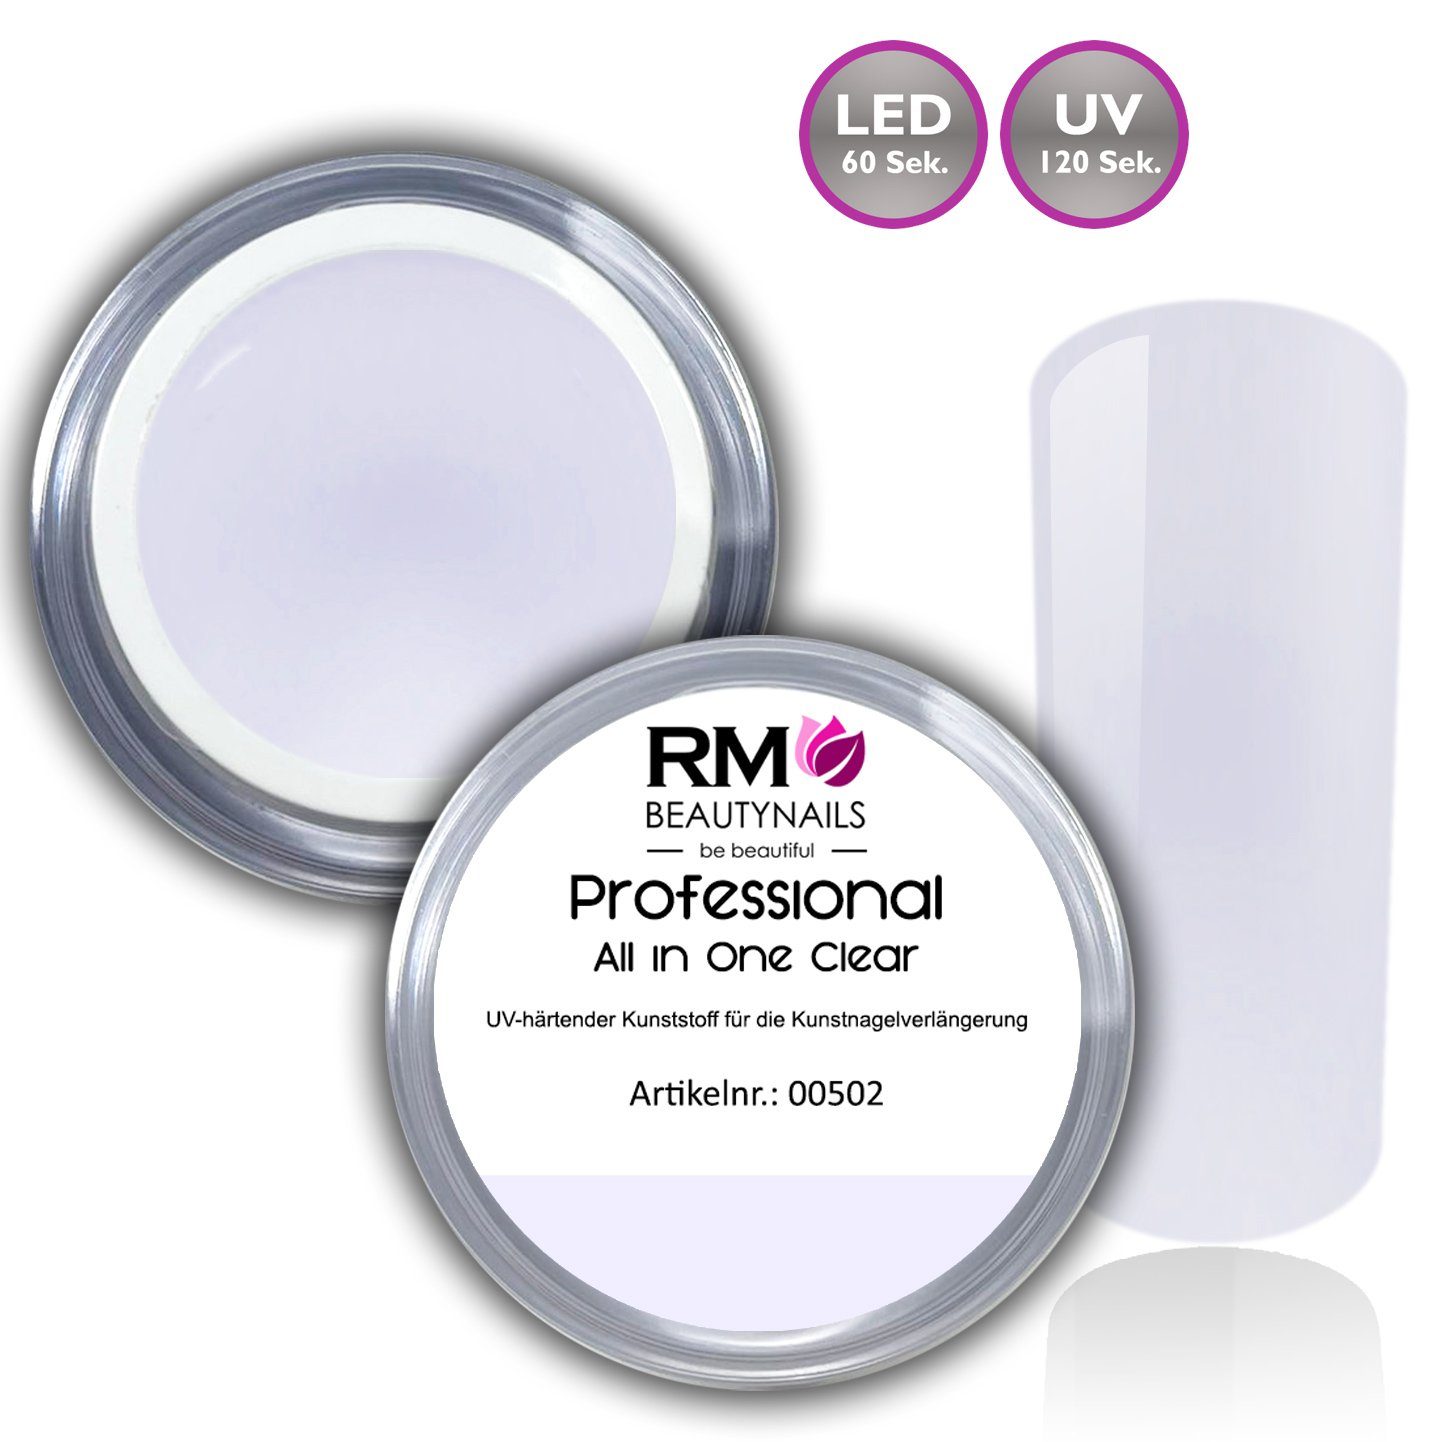 RM Beautynails UV-Gel Professional UV Led Gel All in One Clear 1-Phasengel Nagelgel, Honigeffekt, Nageldesign, Künstliche Nägel, Fingernagel